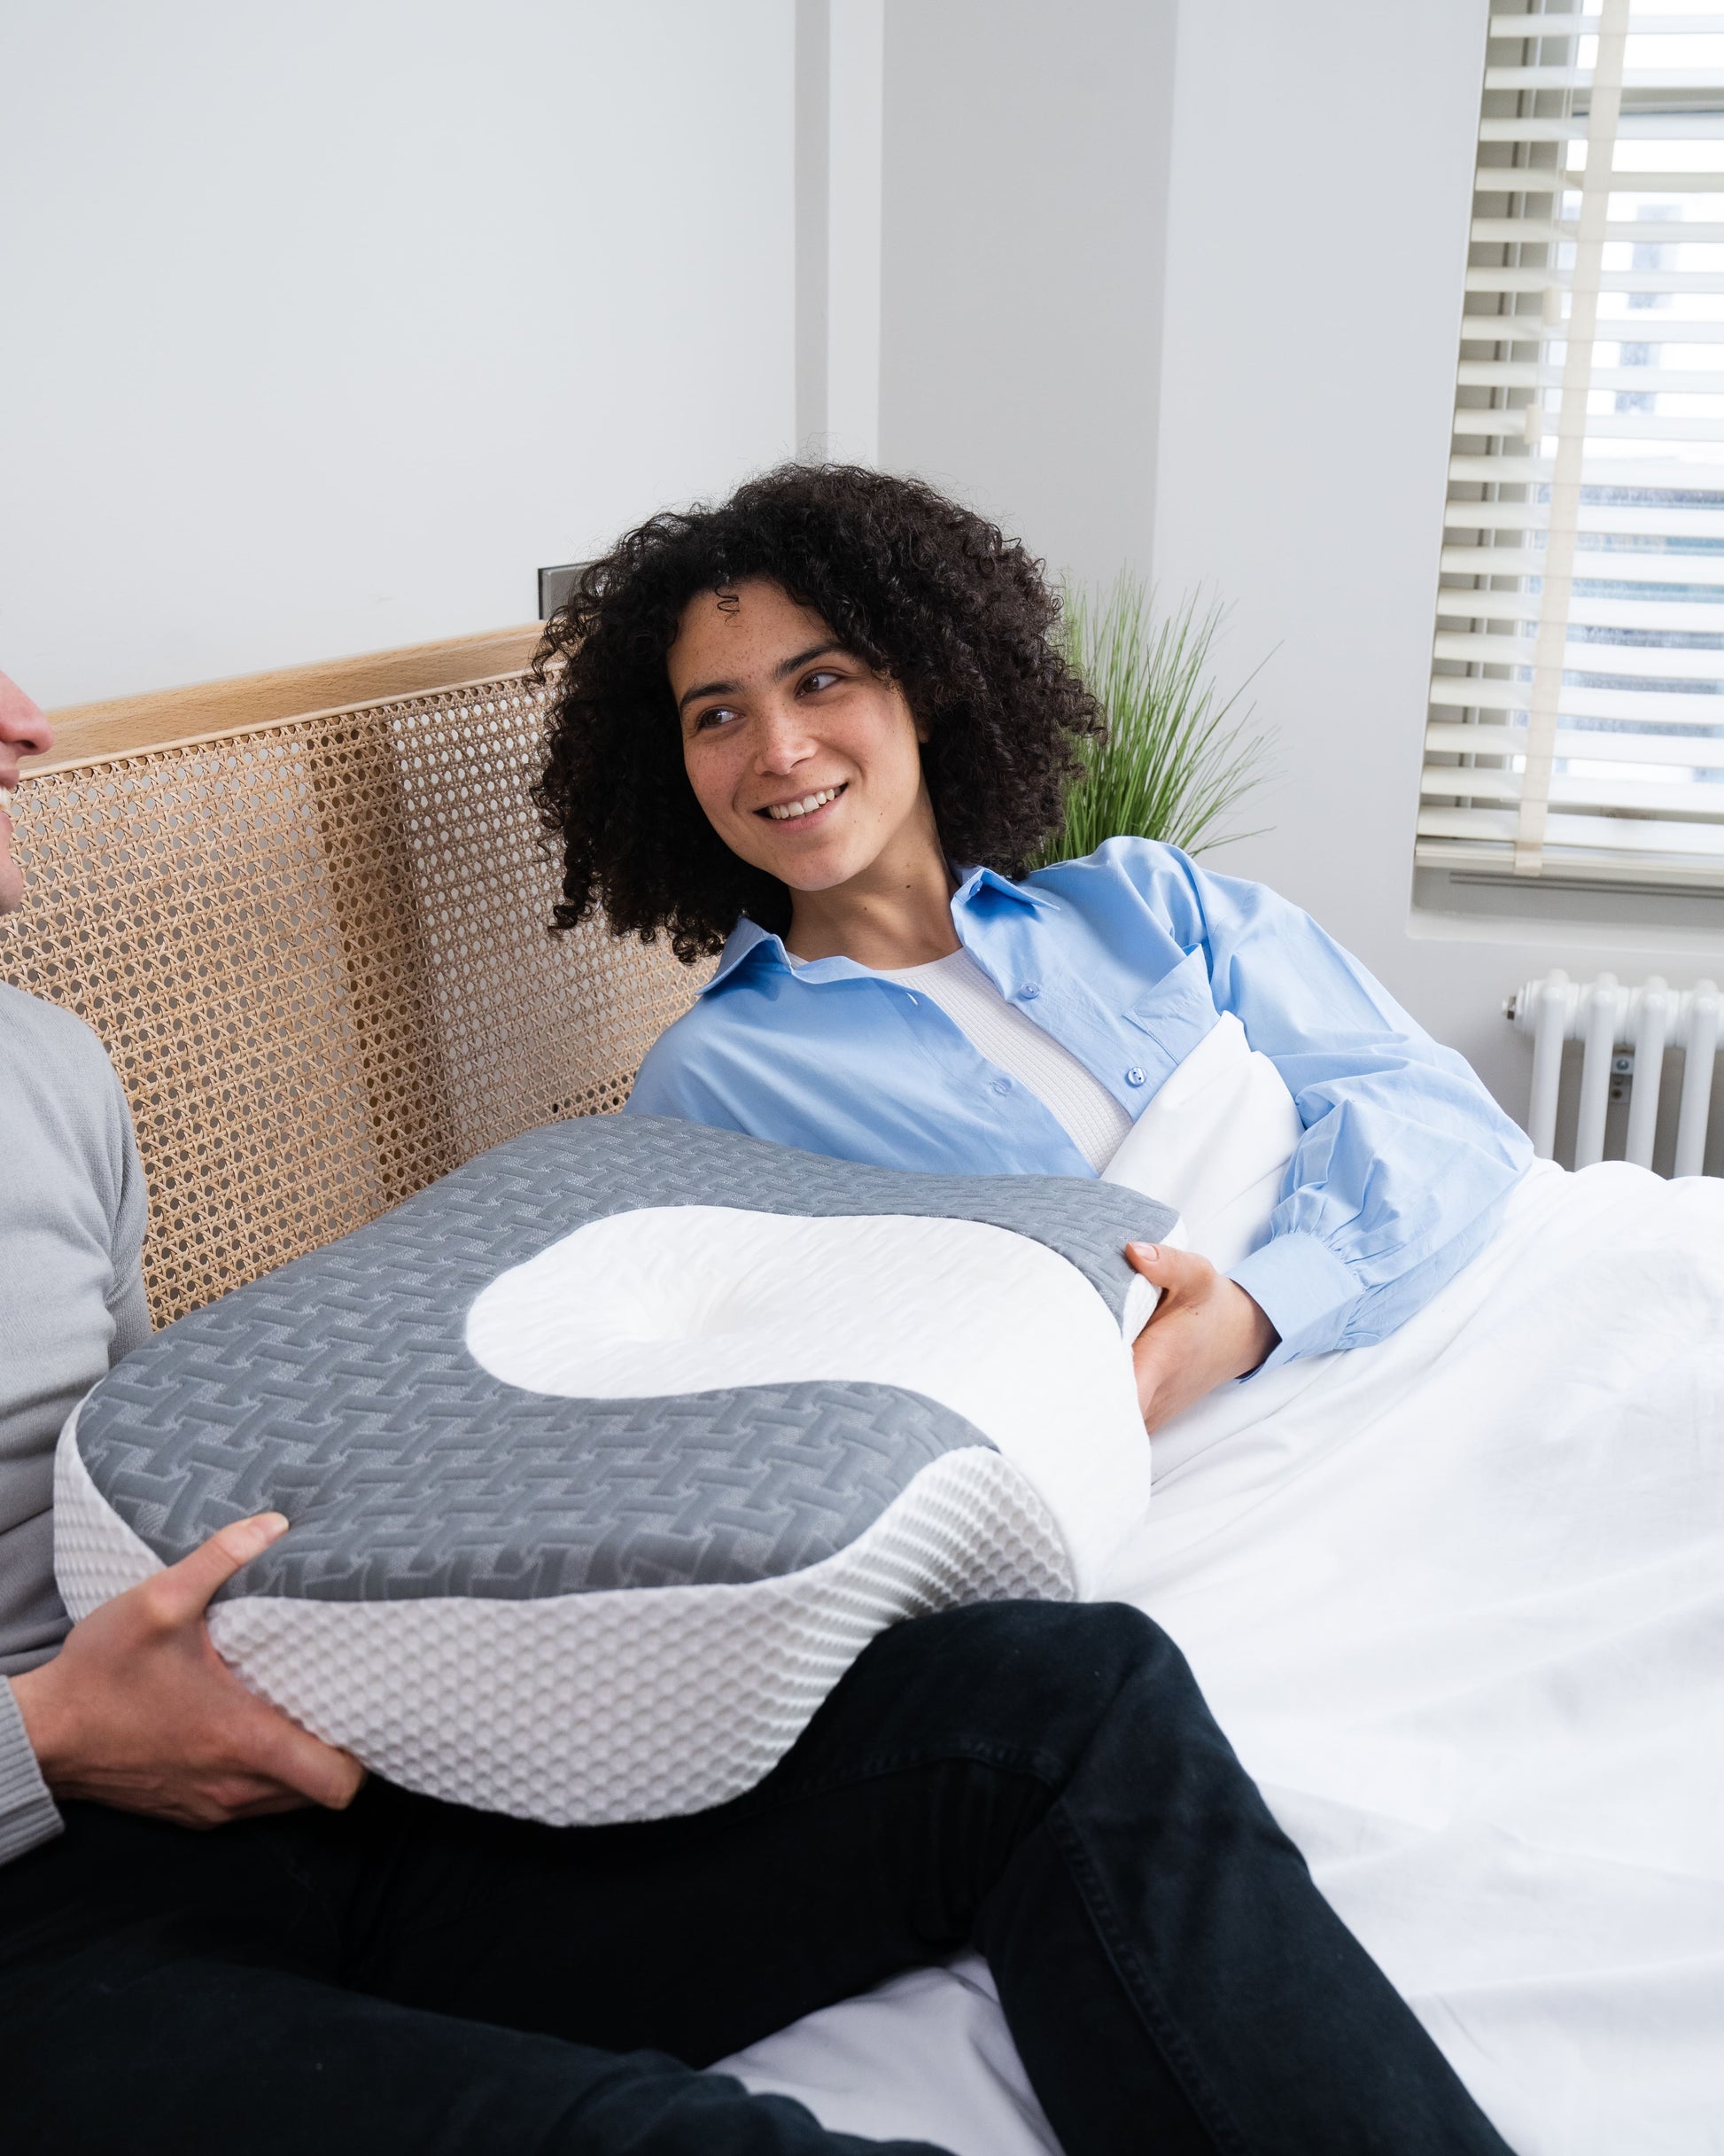 Elviros Knee Pillow for Side Sleepers, Orthopedic Memory Foam